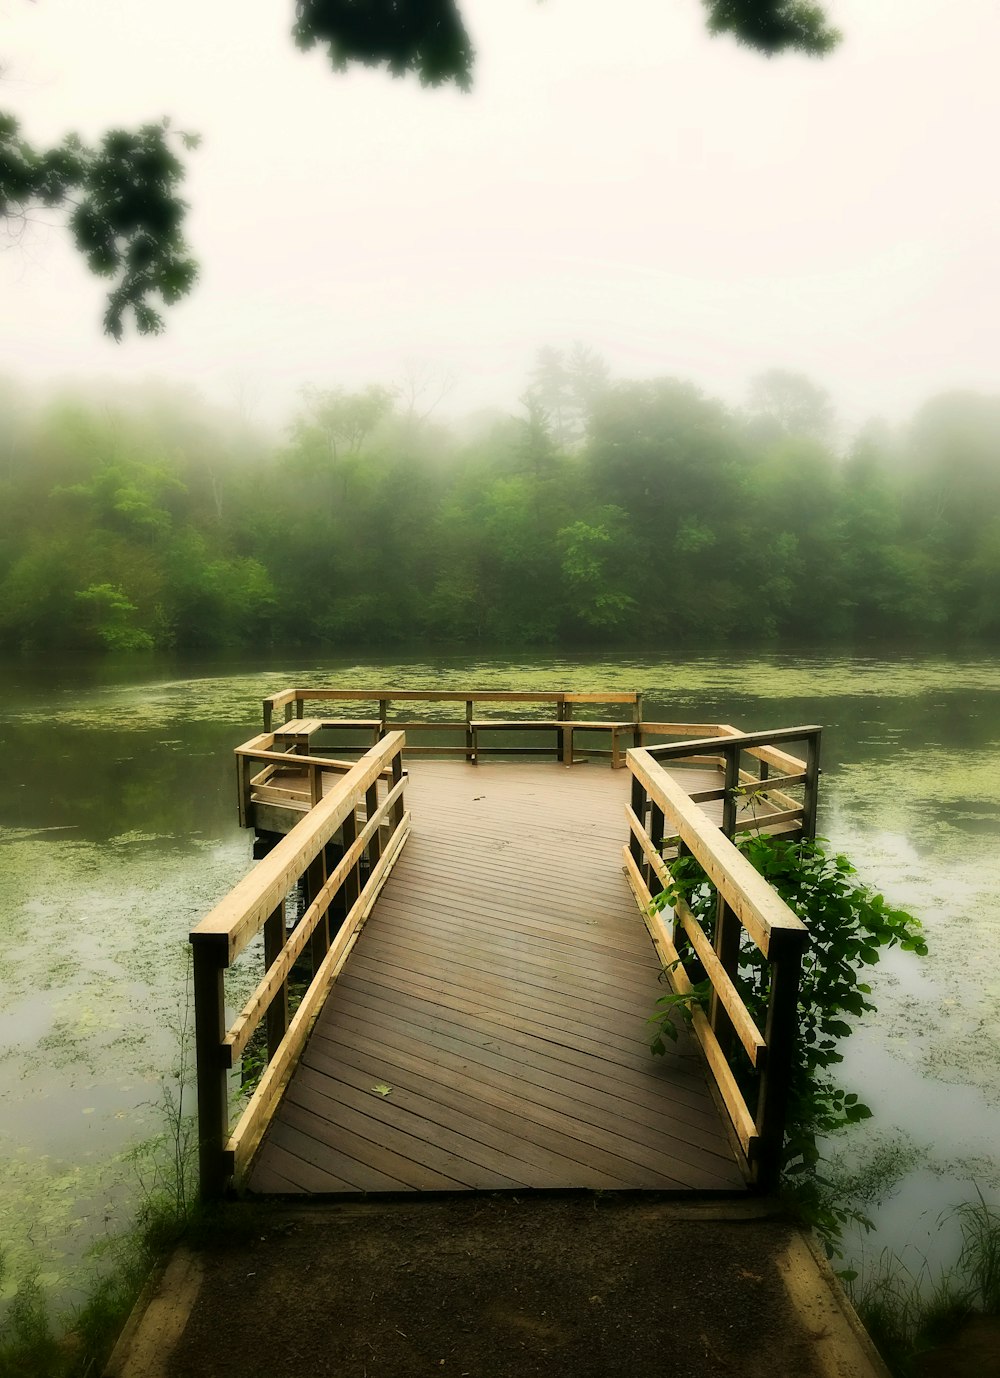 brown wooden dock on lake during daytime photo – Free On Image on Unsplash